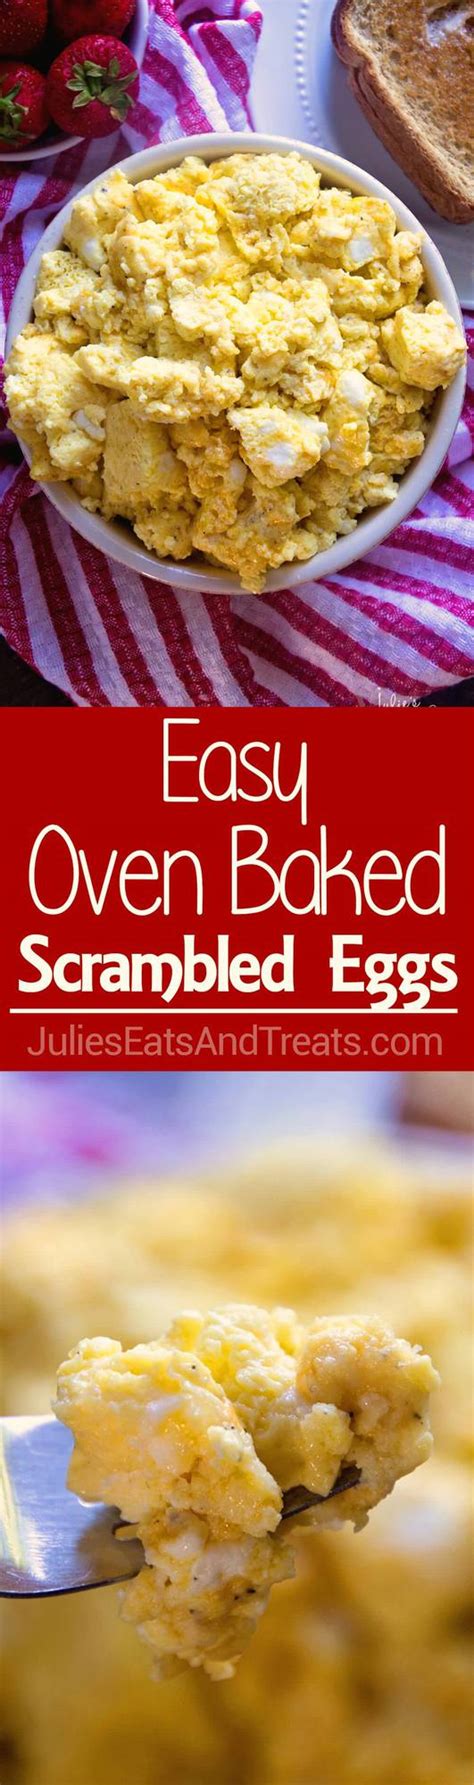 Easy Oven Baked Scrambled Eggs Julies Eats And Treats